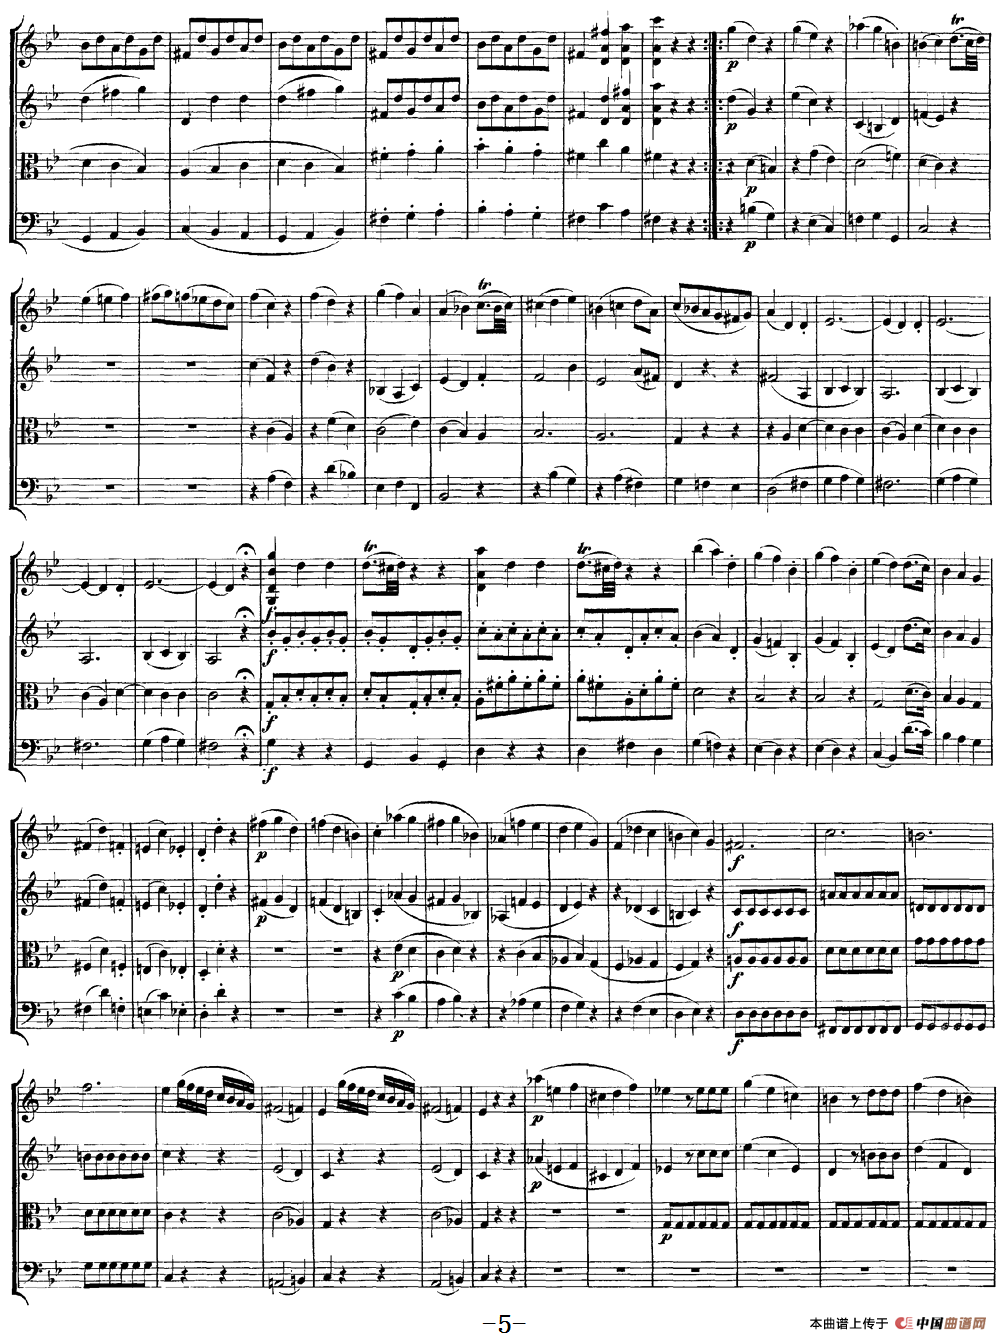 Mozart《Quartet No.6 in Bb Major,K.159》（总谱）